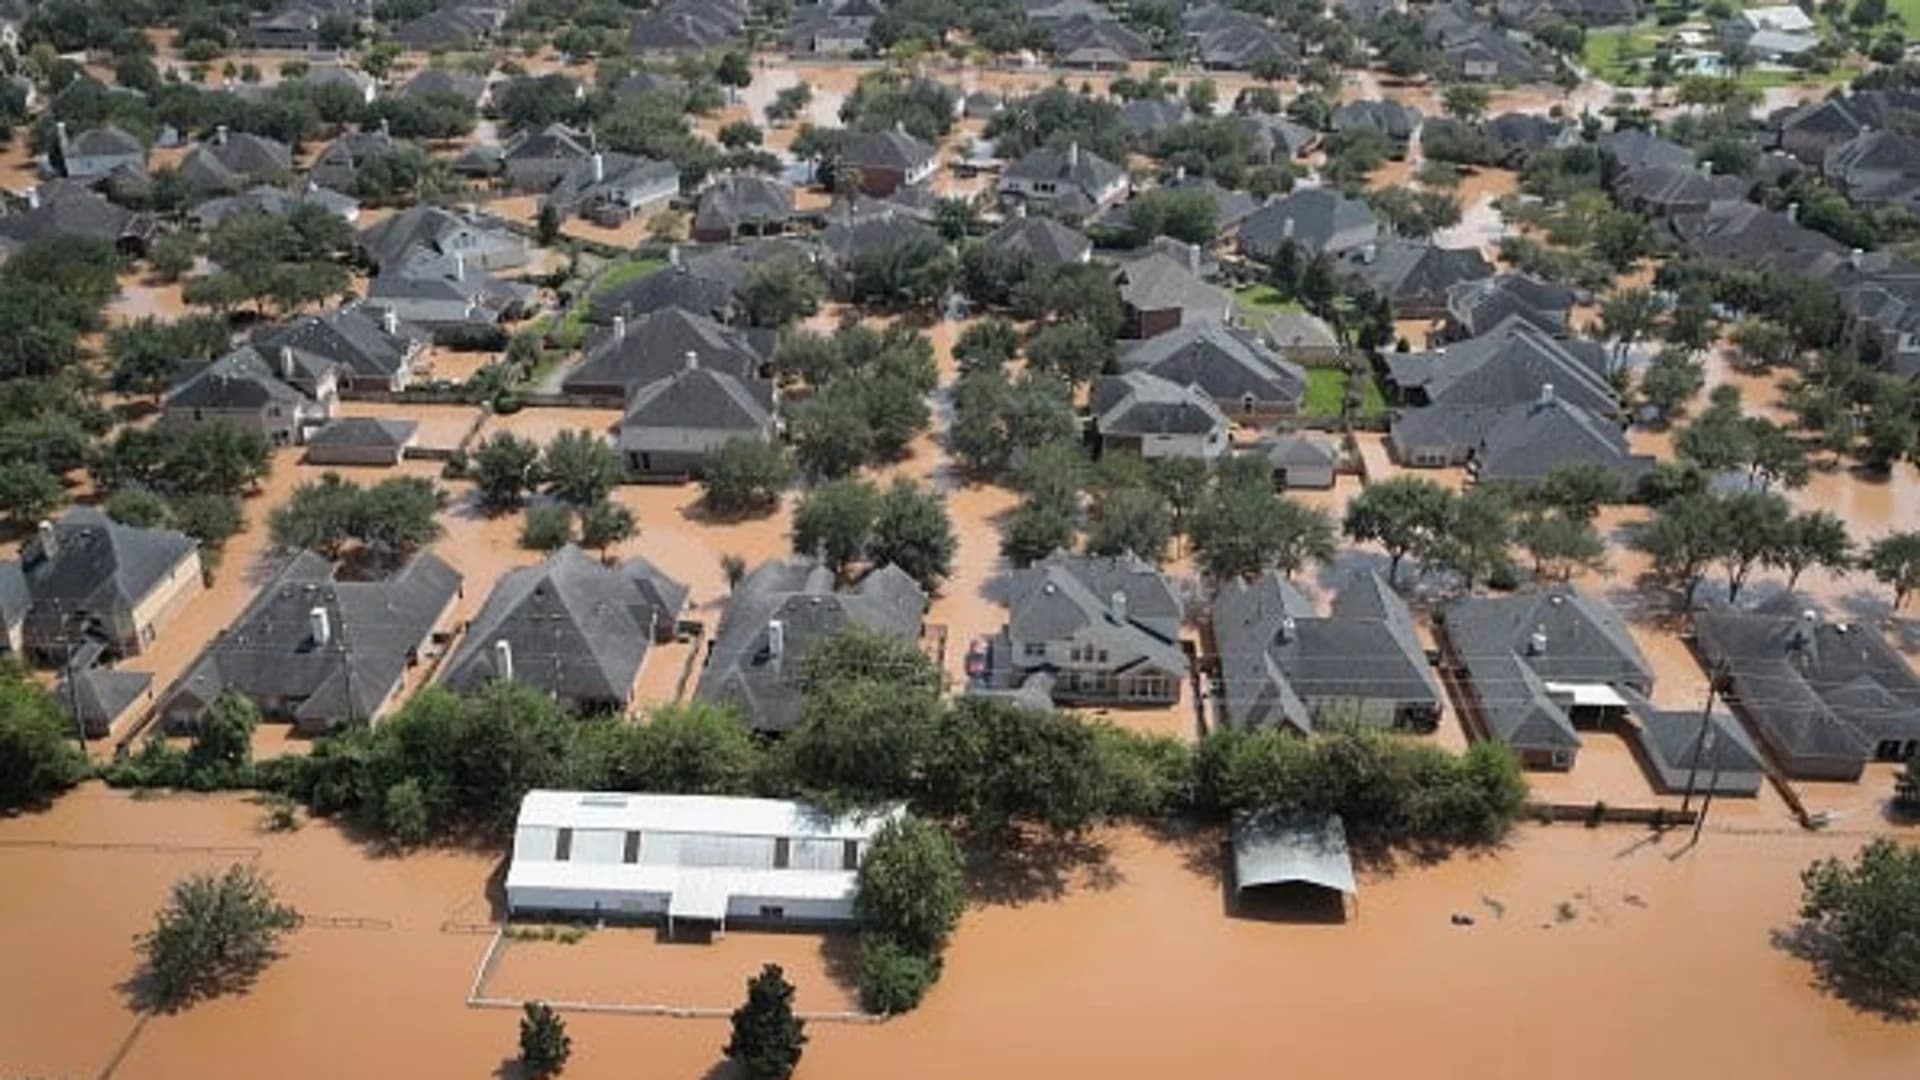 A week after hitting Texas, Harvey still causing evacuations